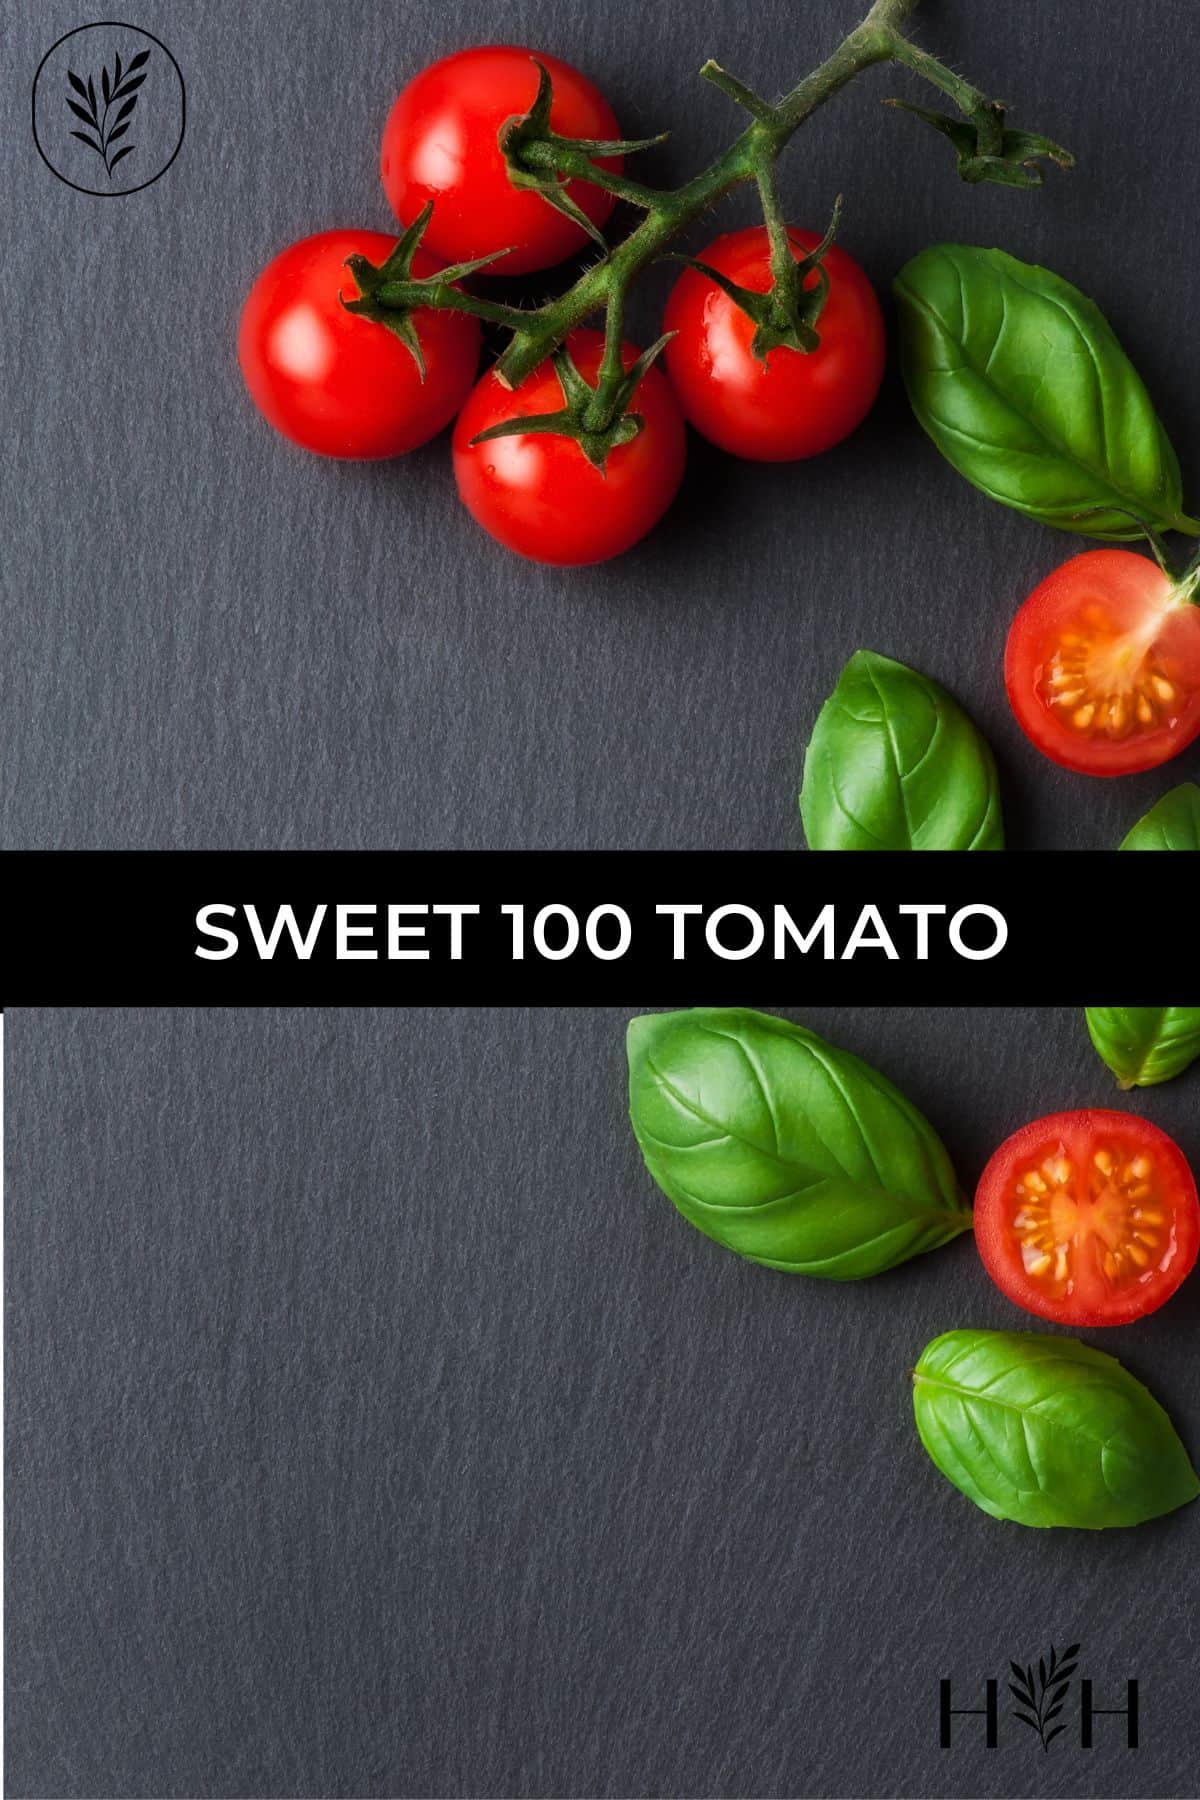 Sweet 100 tomato via @home4theharvest